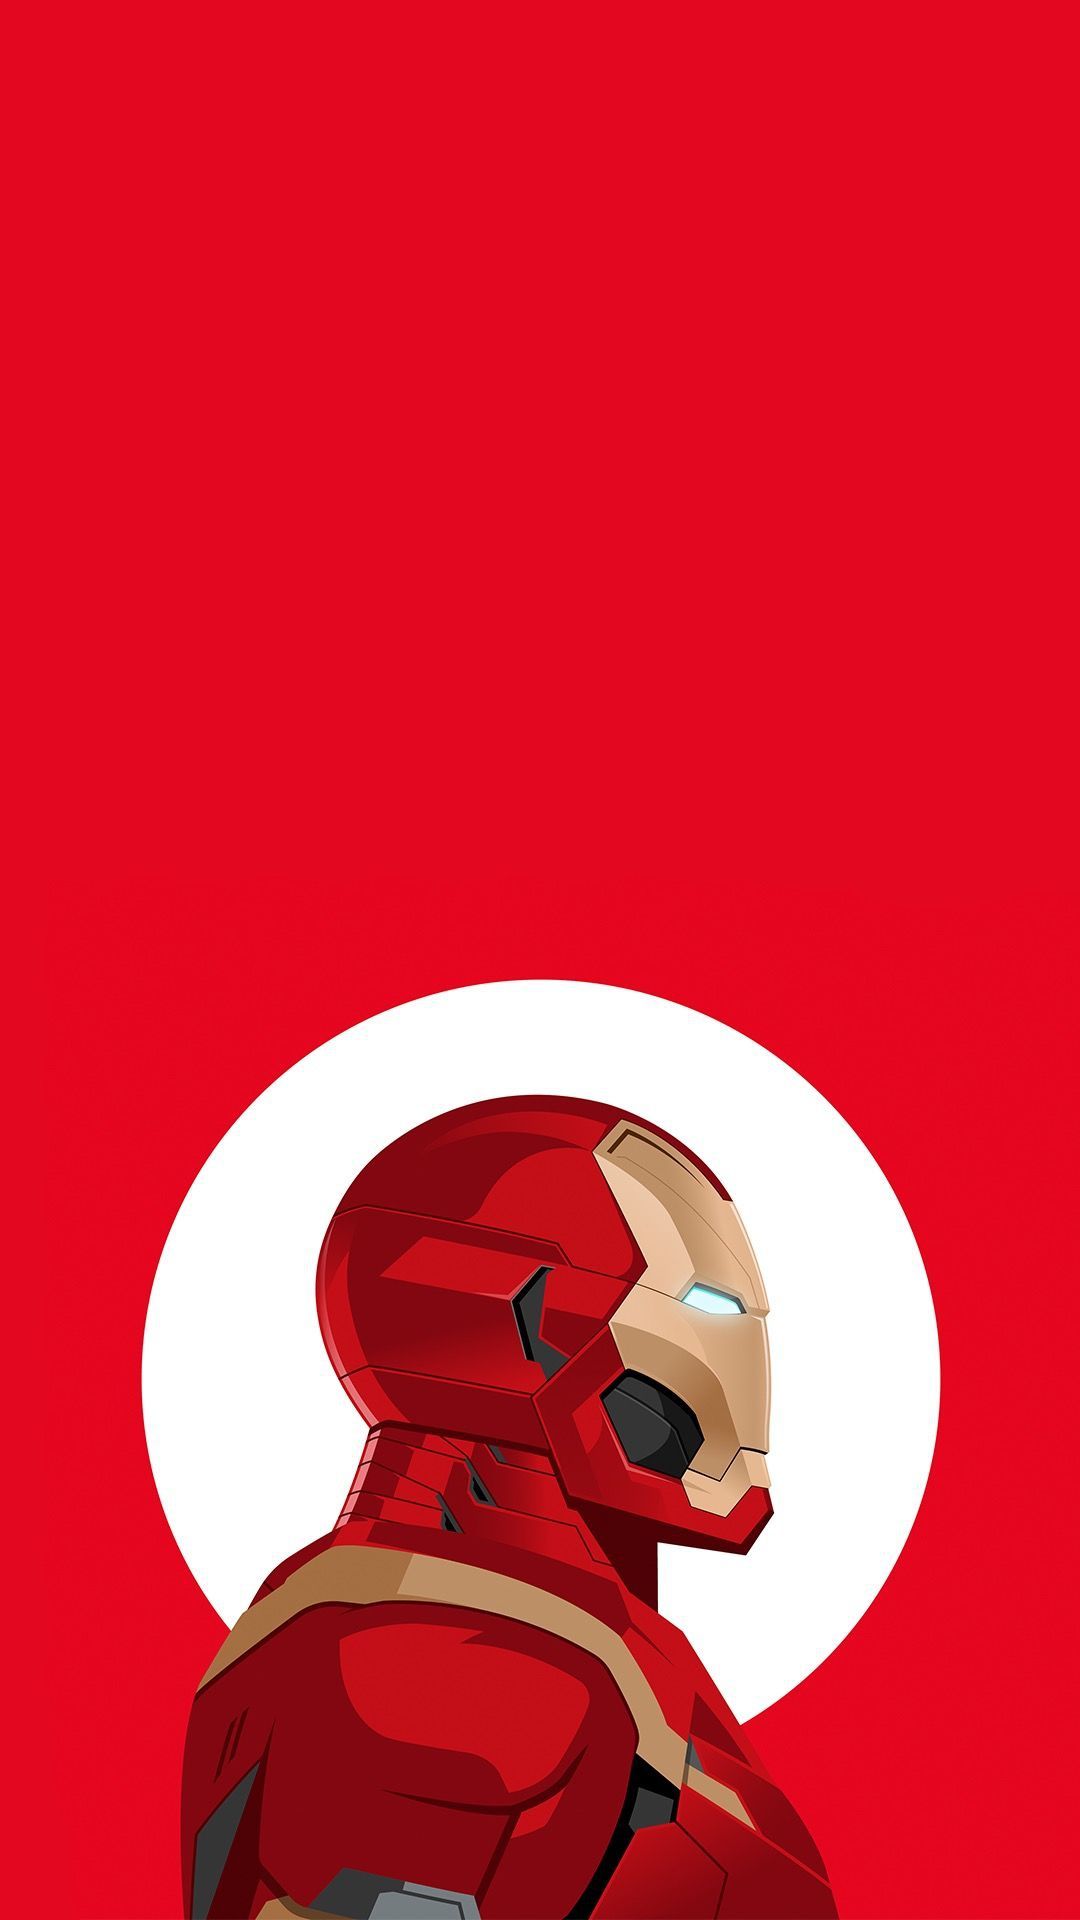 Iron Man Armour Red Wallpaper. Iron man art, Marvel iron man, Superhero wallpaper